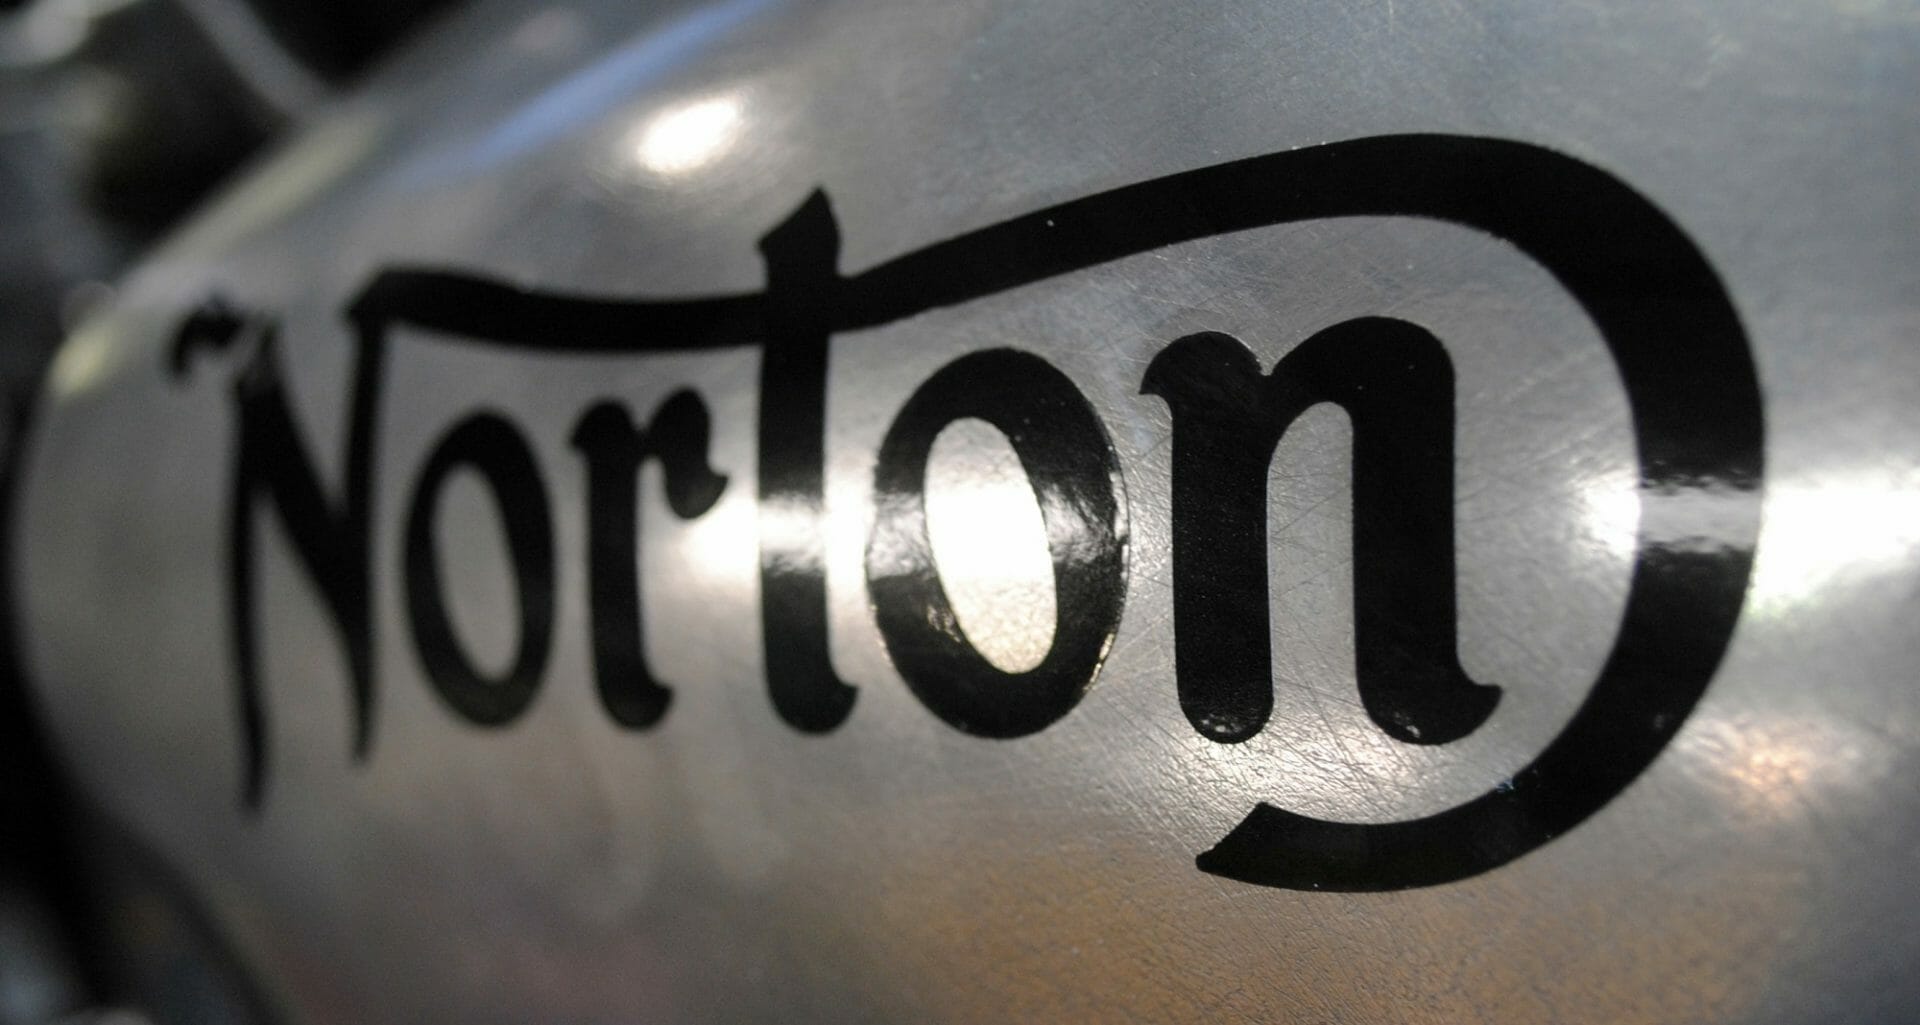 Norton will Elektromotorrad entwickeln - MOTORCYCLES.NEWS